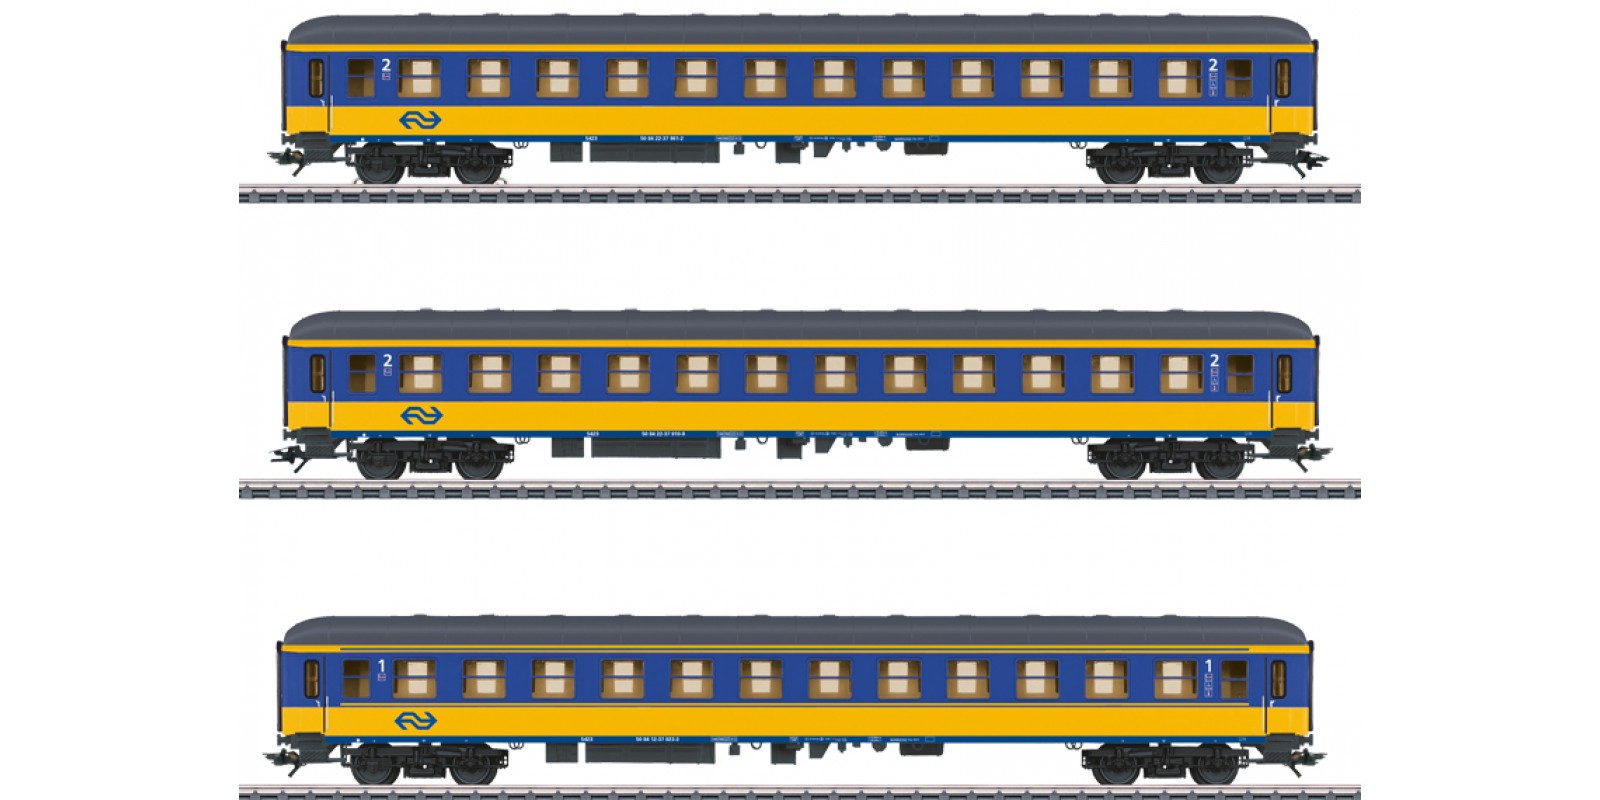 42904 Car Set with 3 Express Train Passenger Cars